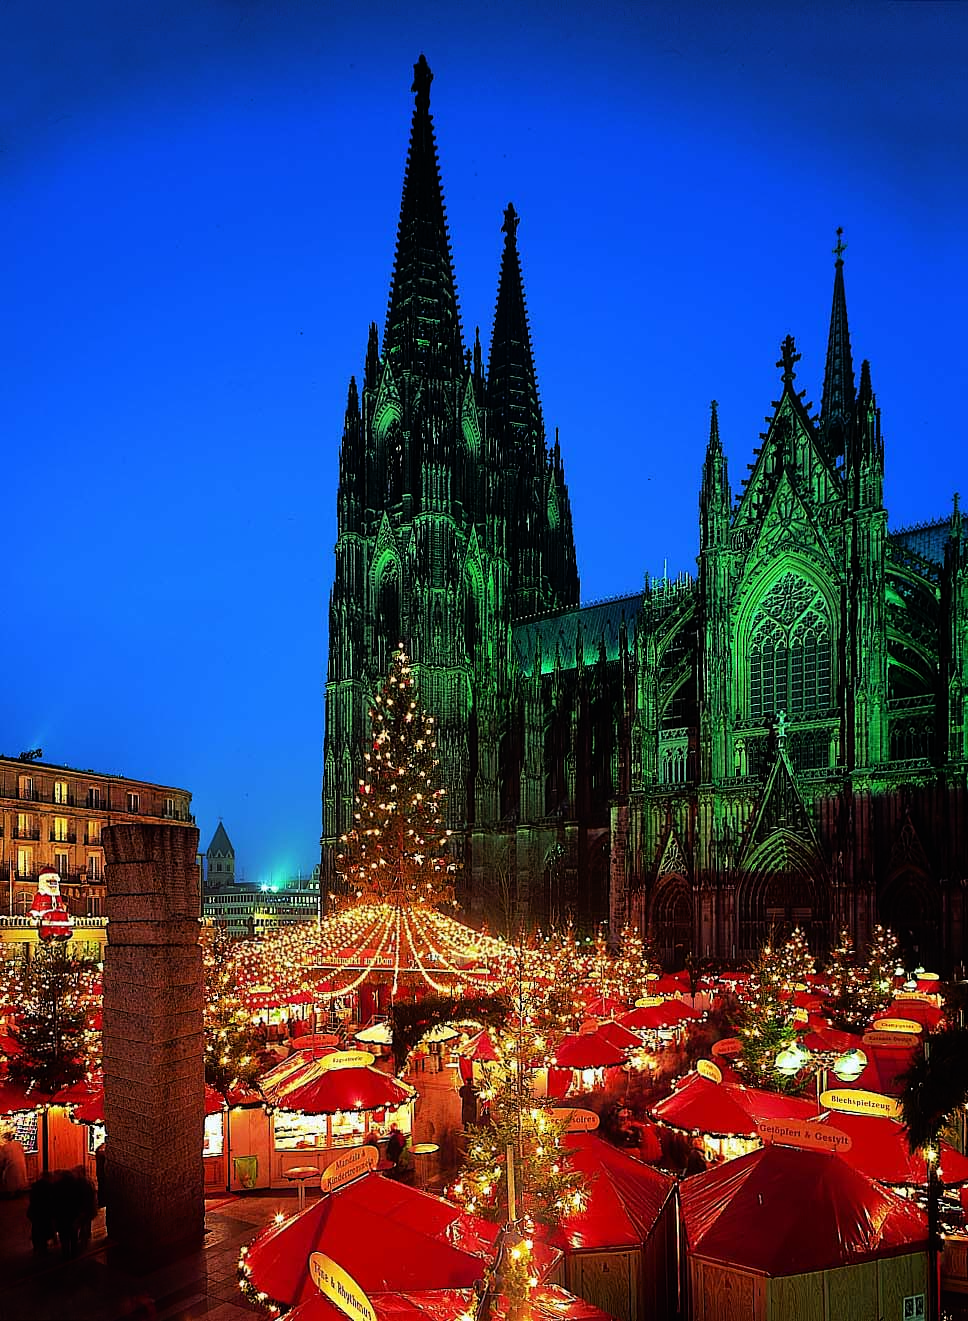 The Cologne Christmas Market 2